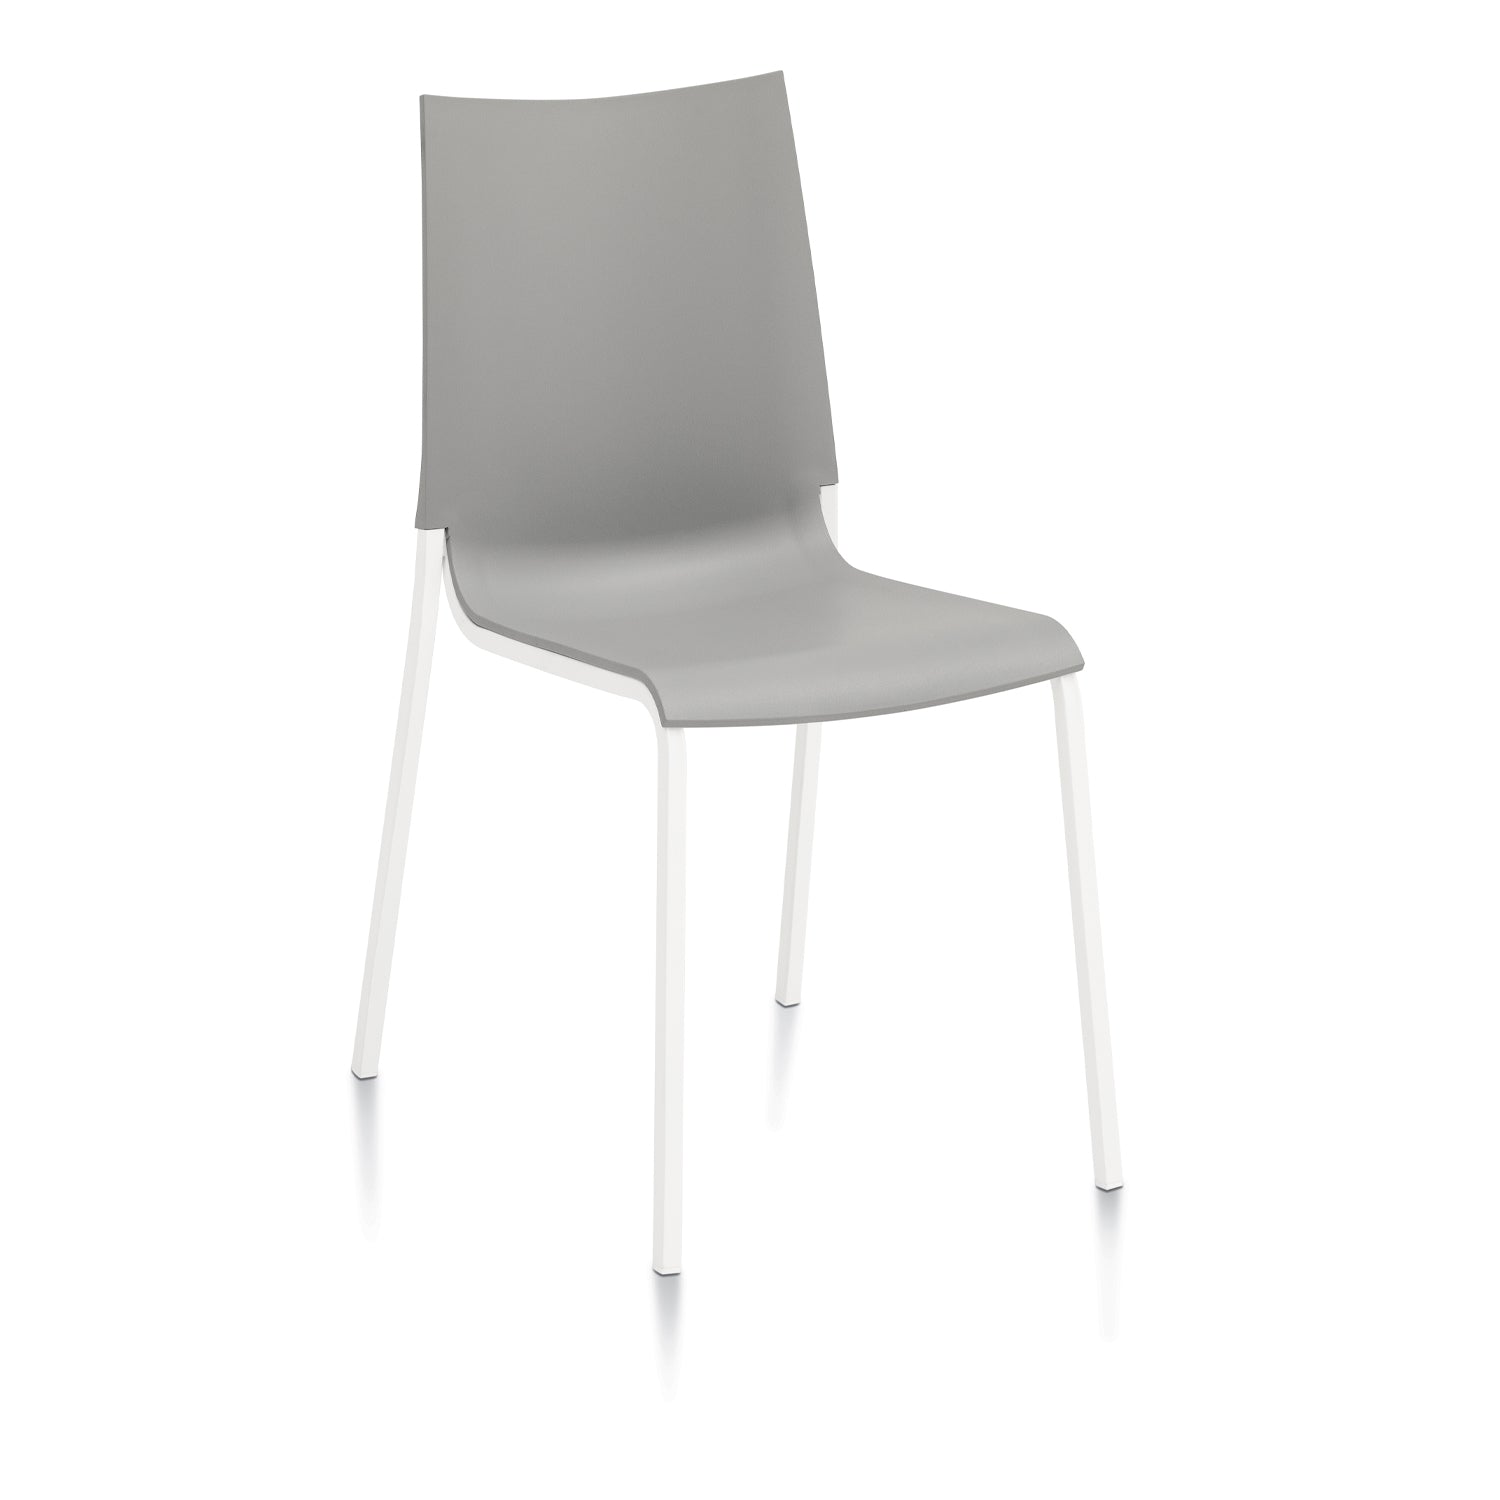 Eva Chair By Bontempi Casa - Grey & White